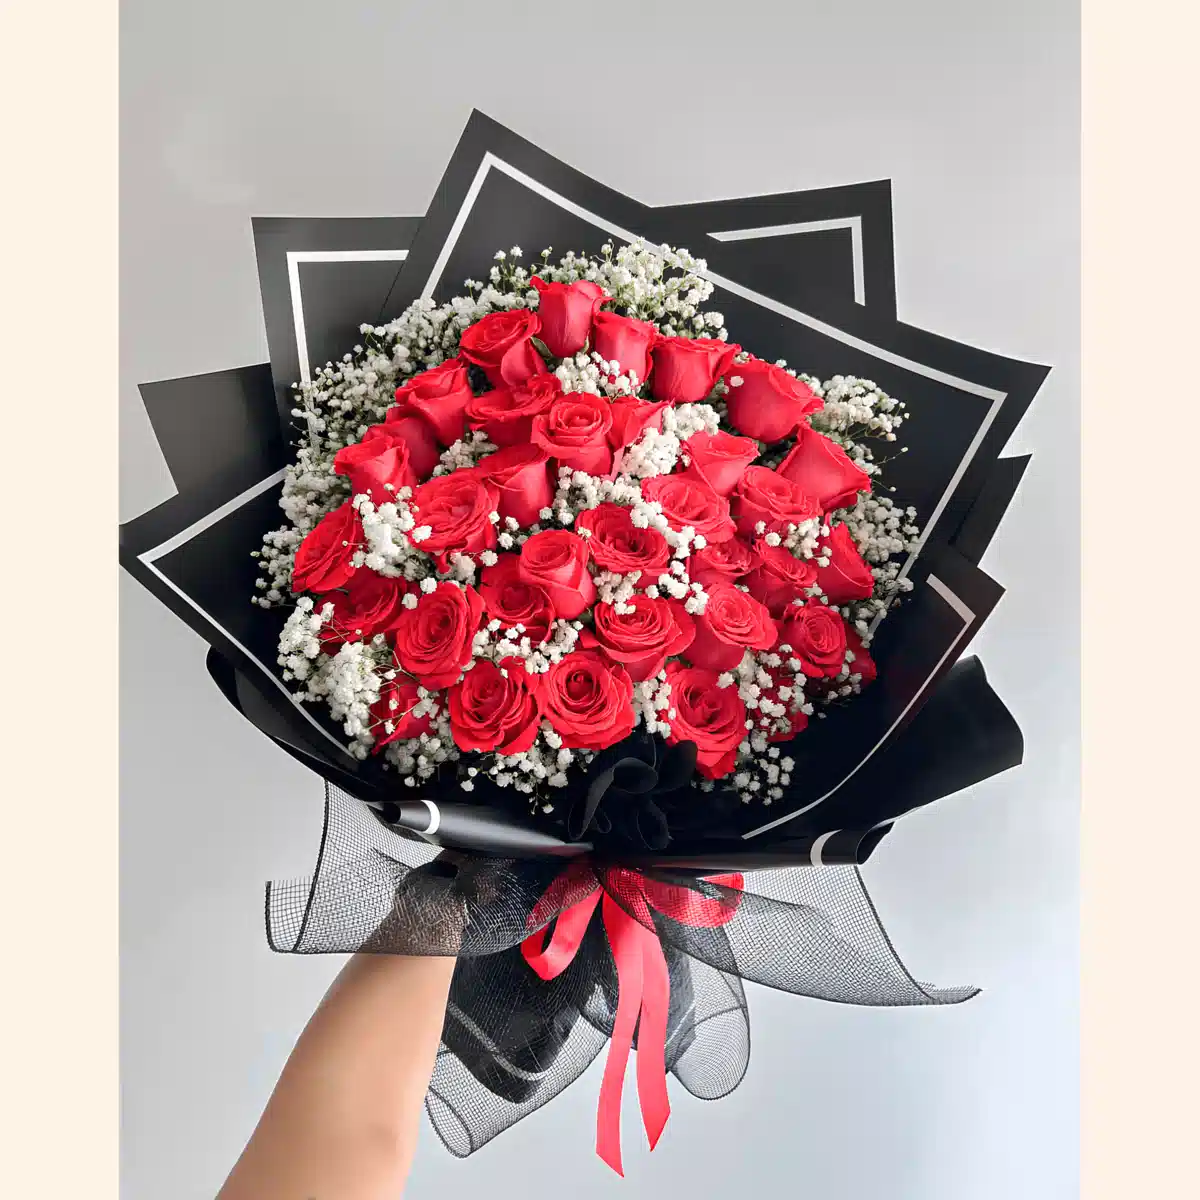 bouquet rubi flores domicilio bogota floristeria hechizos de amor regalos